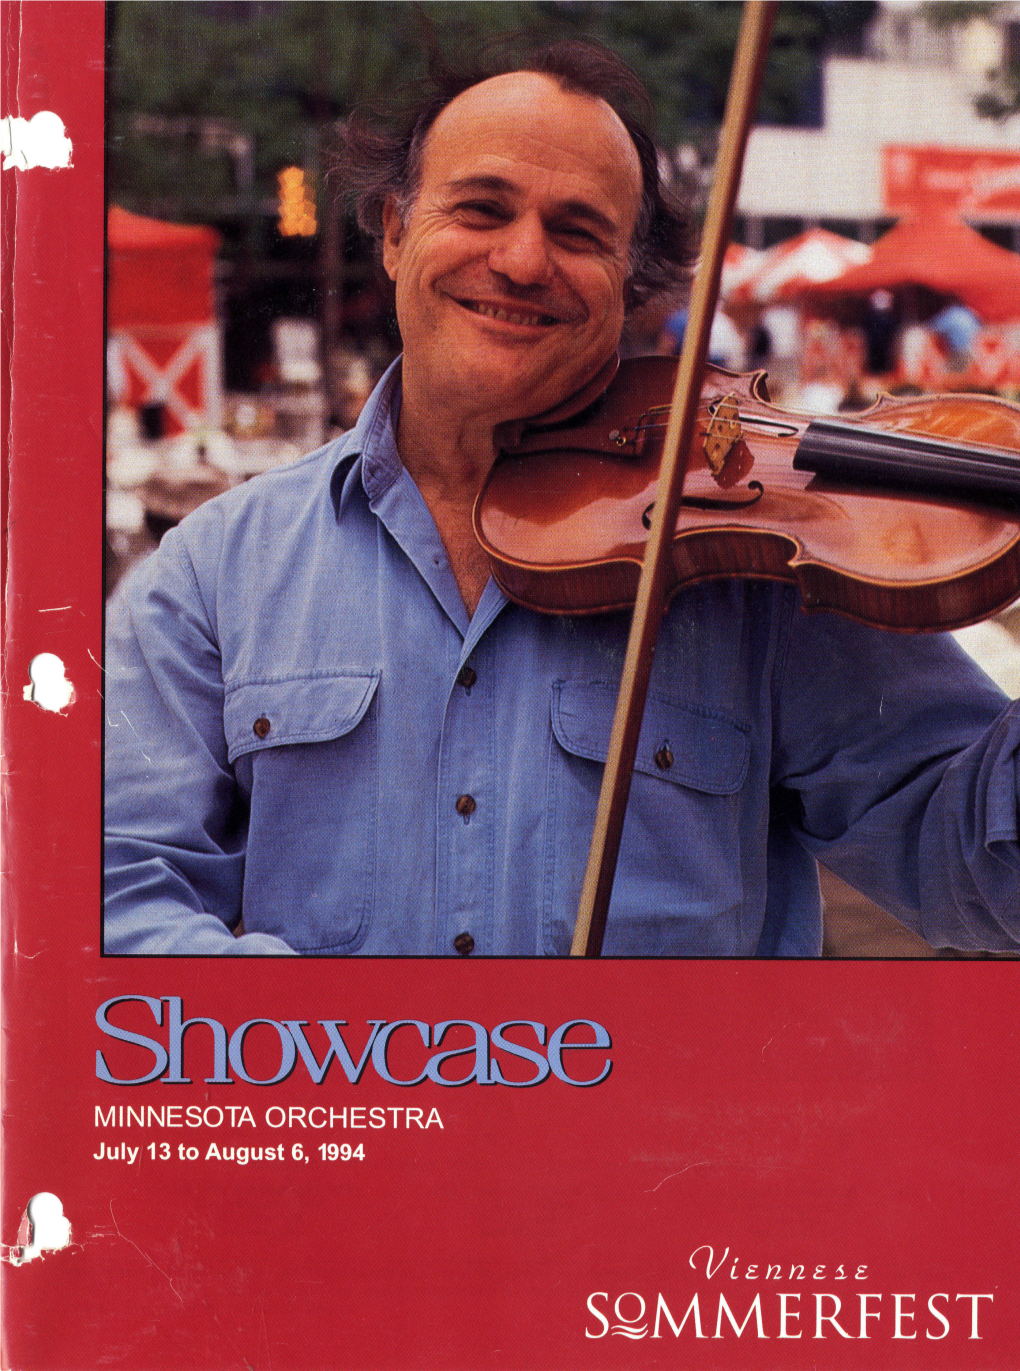 Viennese, Sqmmerfest, Showcase, Minnesota Orchestra, July 13, 1994